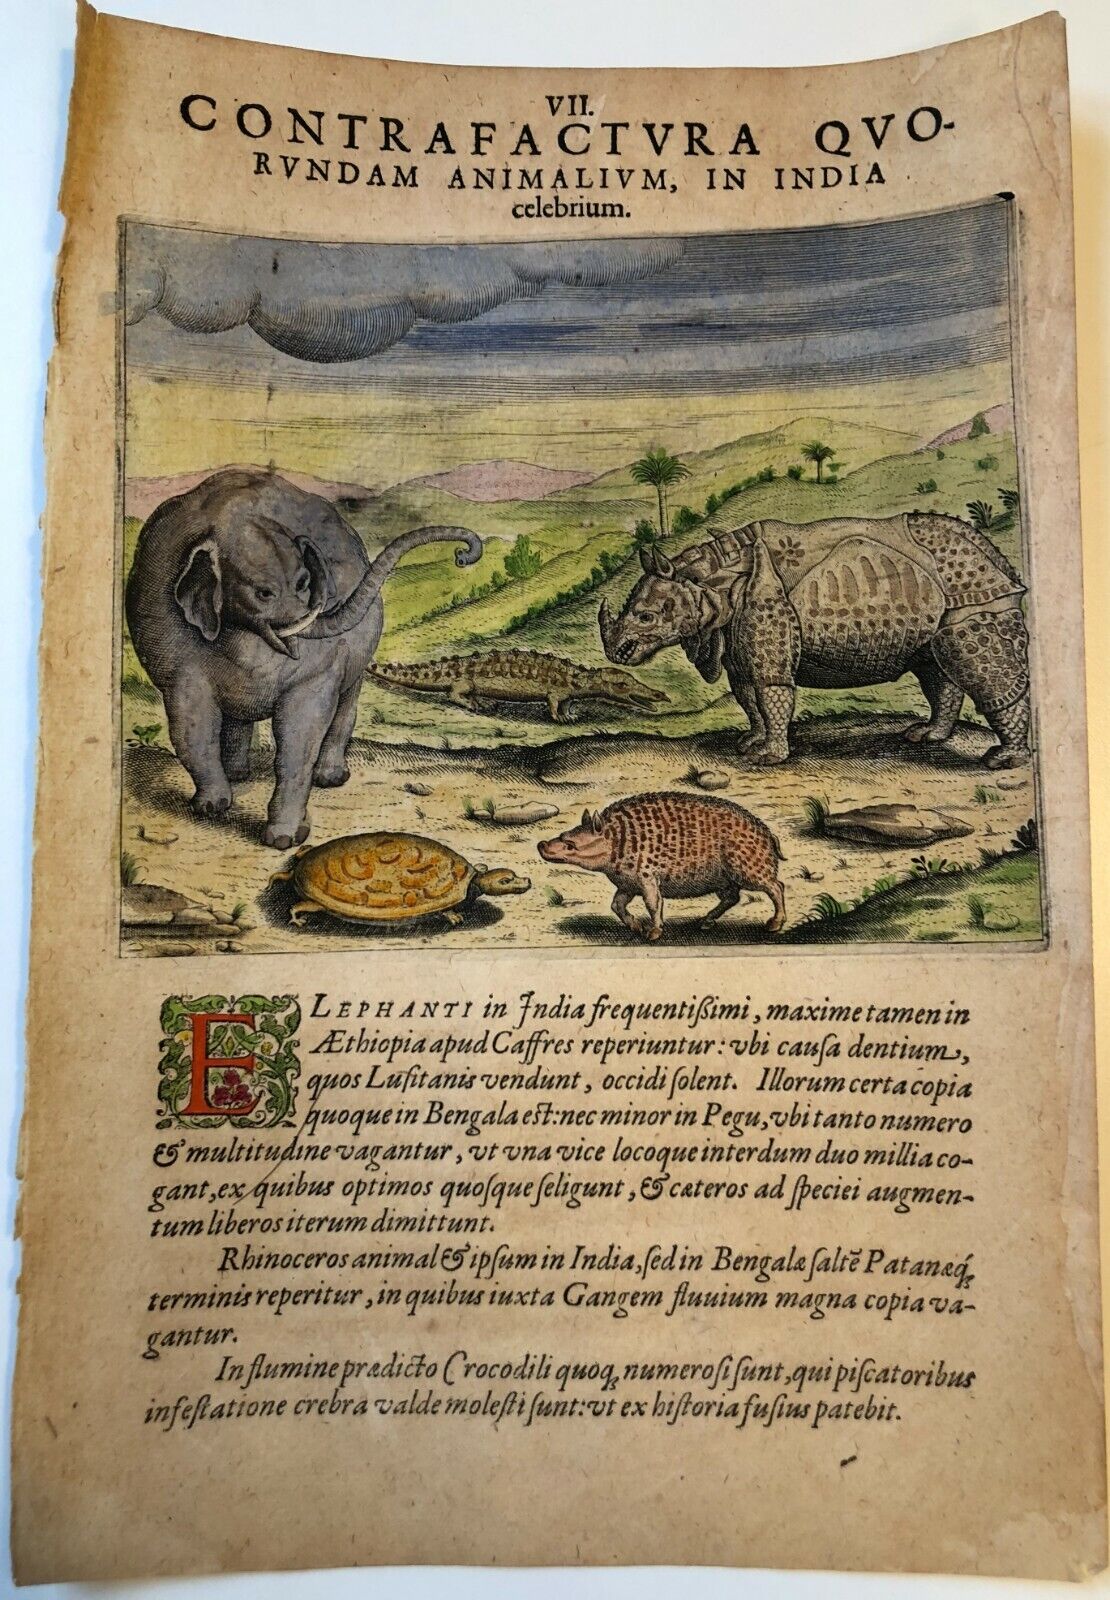 De Bry - ”An Elephant, A Rhinoceros and a Crocodile” - 1601 - Linschoten - India